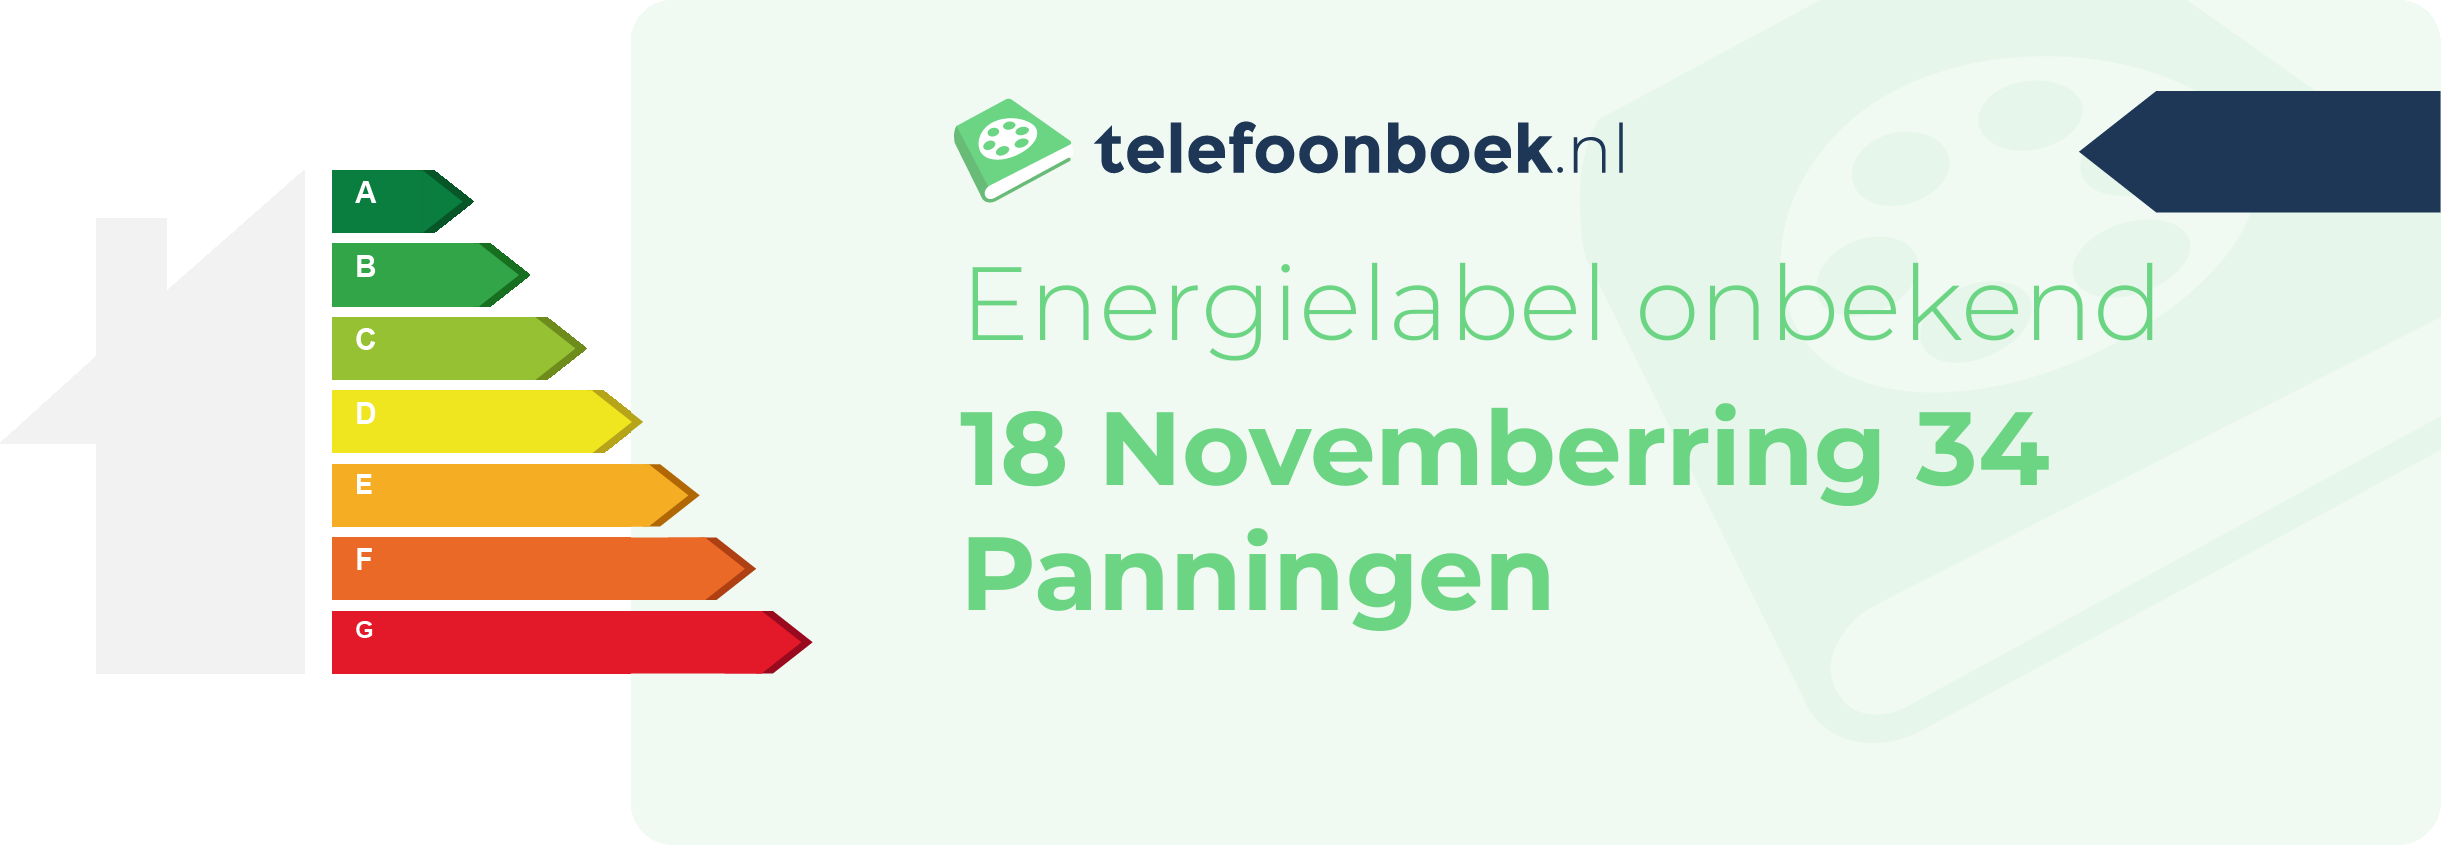 Energielabel 18 Novemberring 34 Panningen